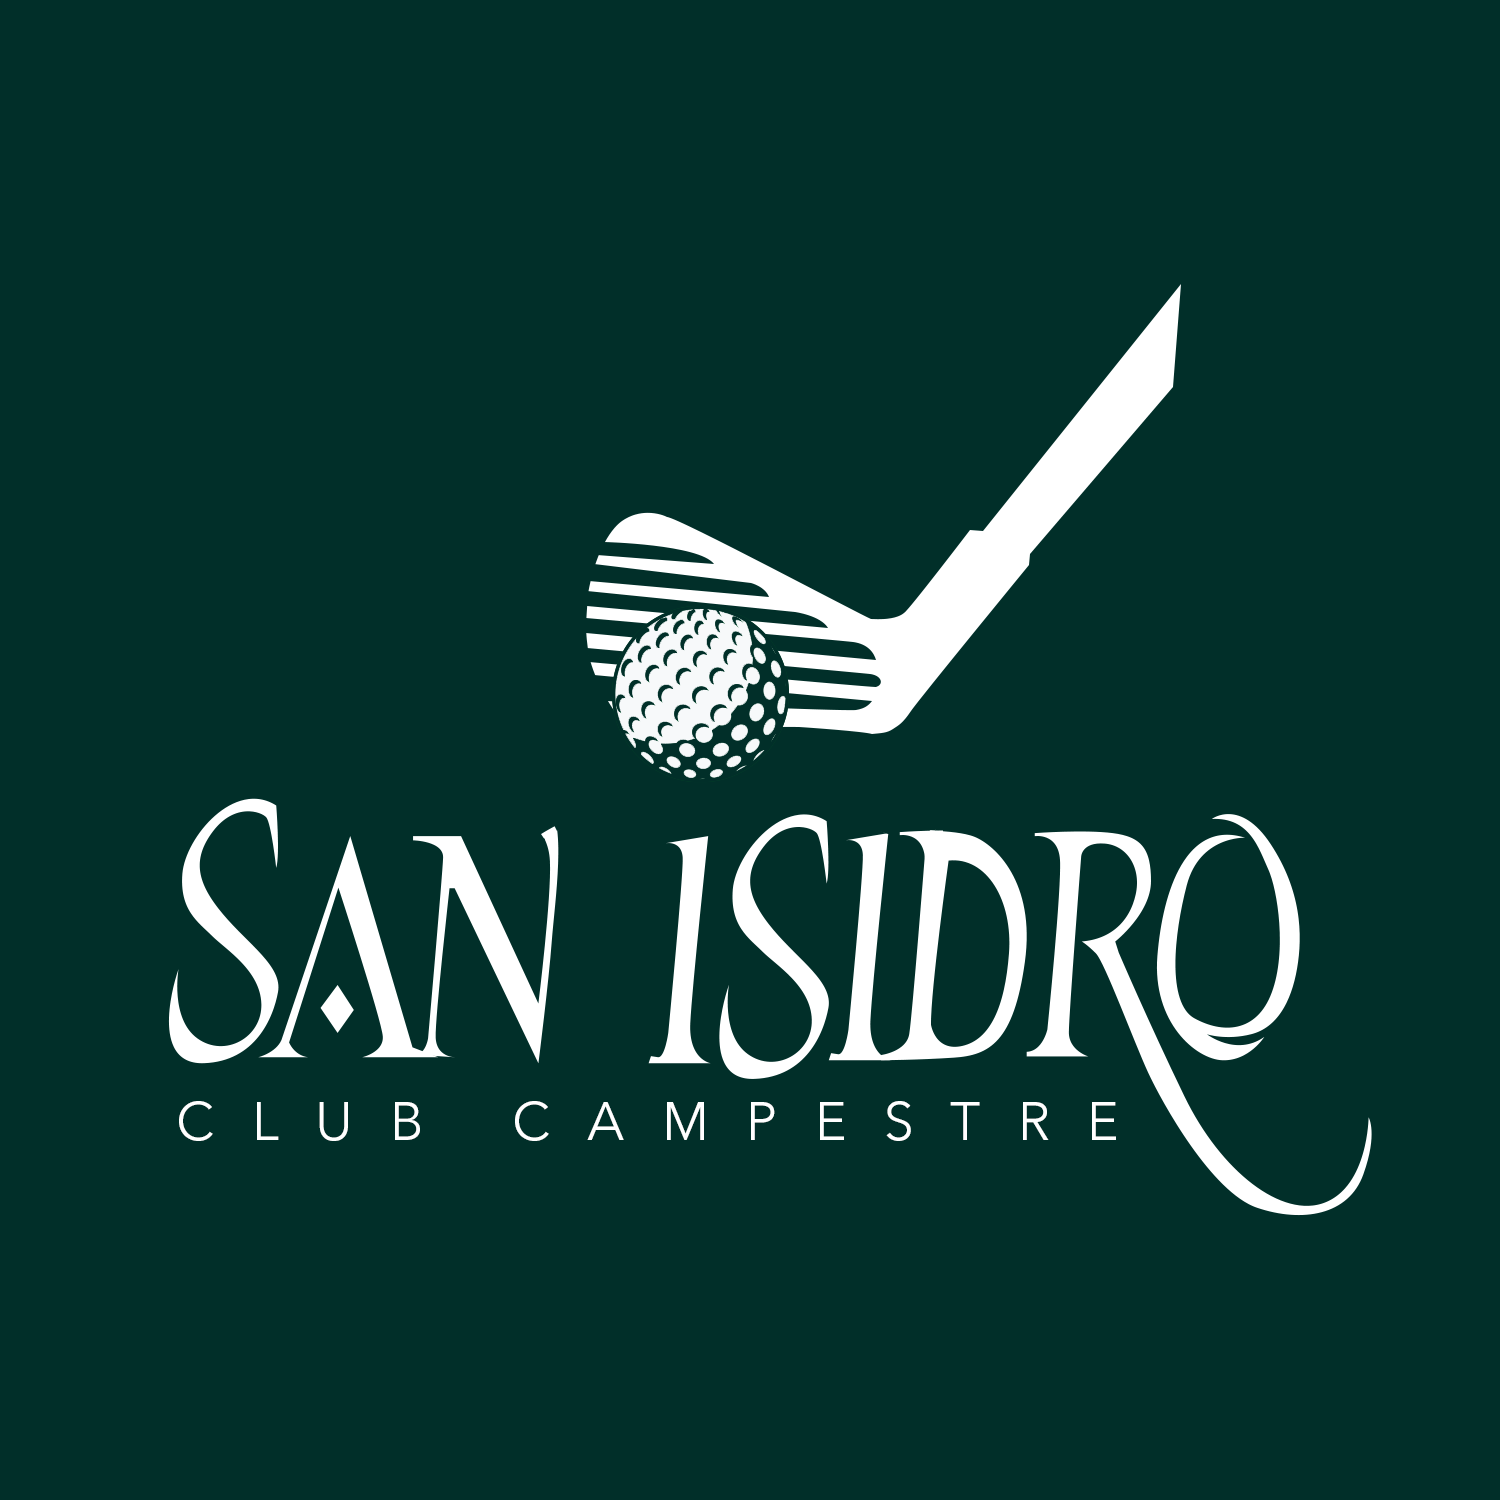 (c) Clubcampestresanisidro.com